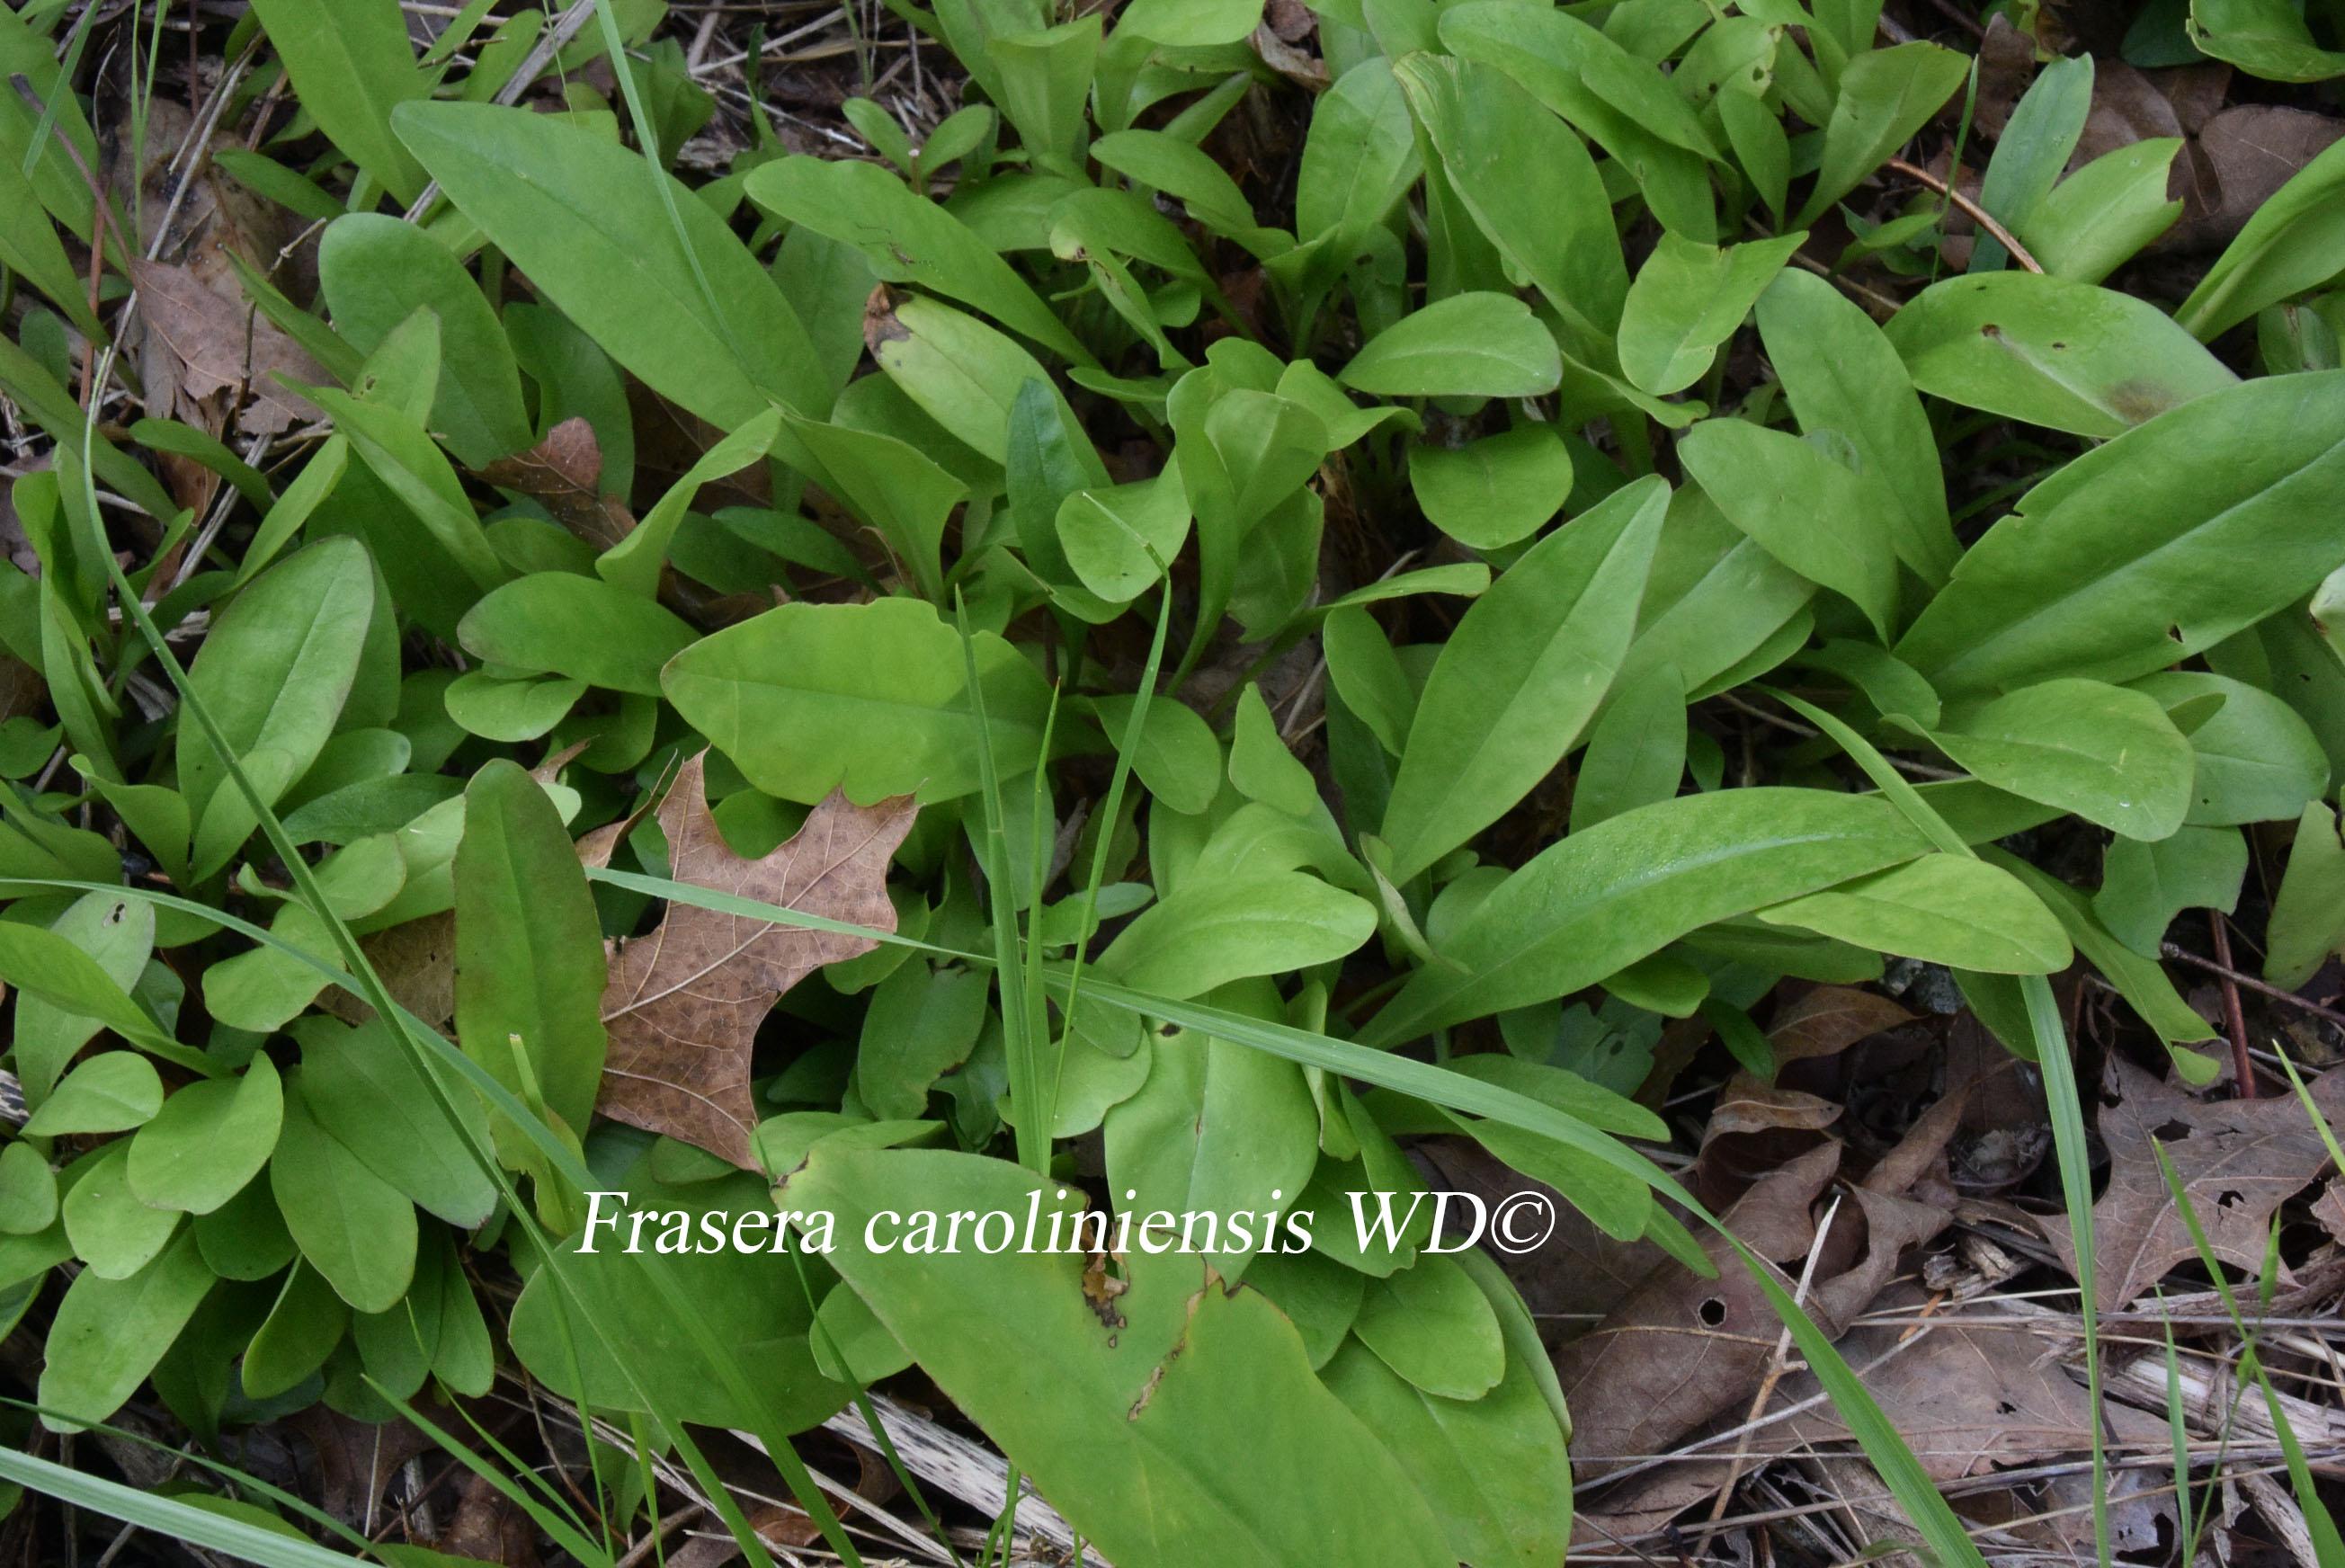 Frasera caroliniensis - American Colombo